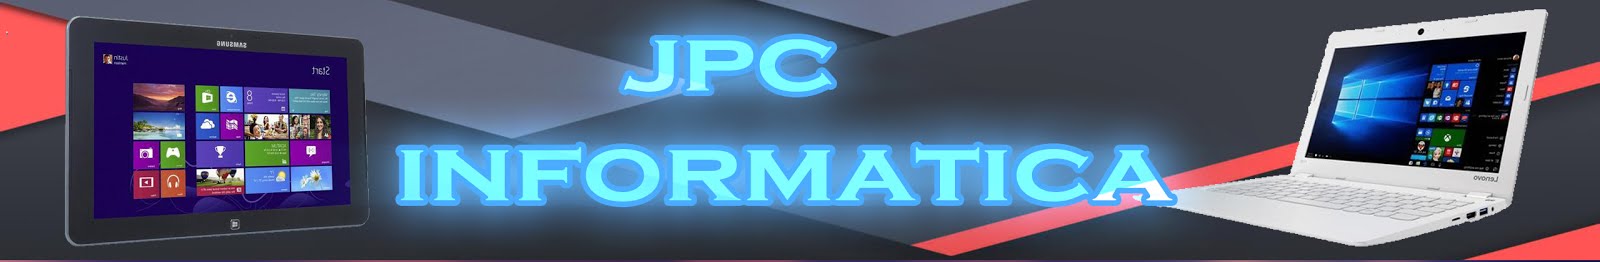                  JPC informatica